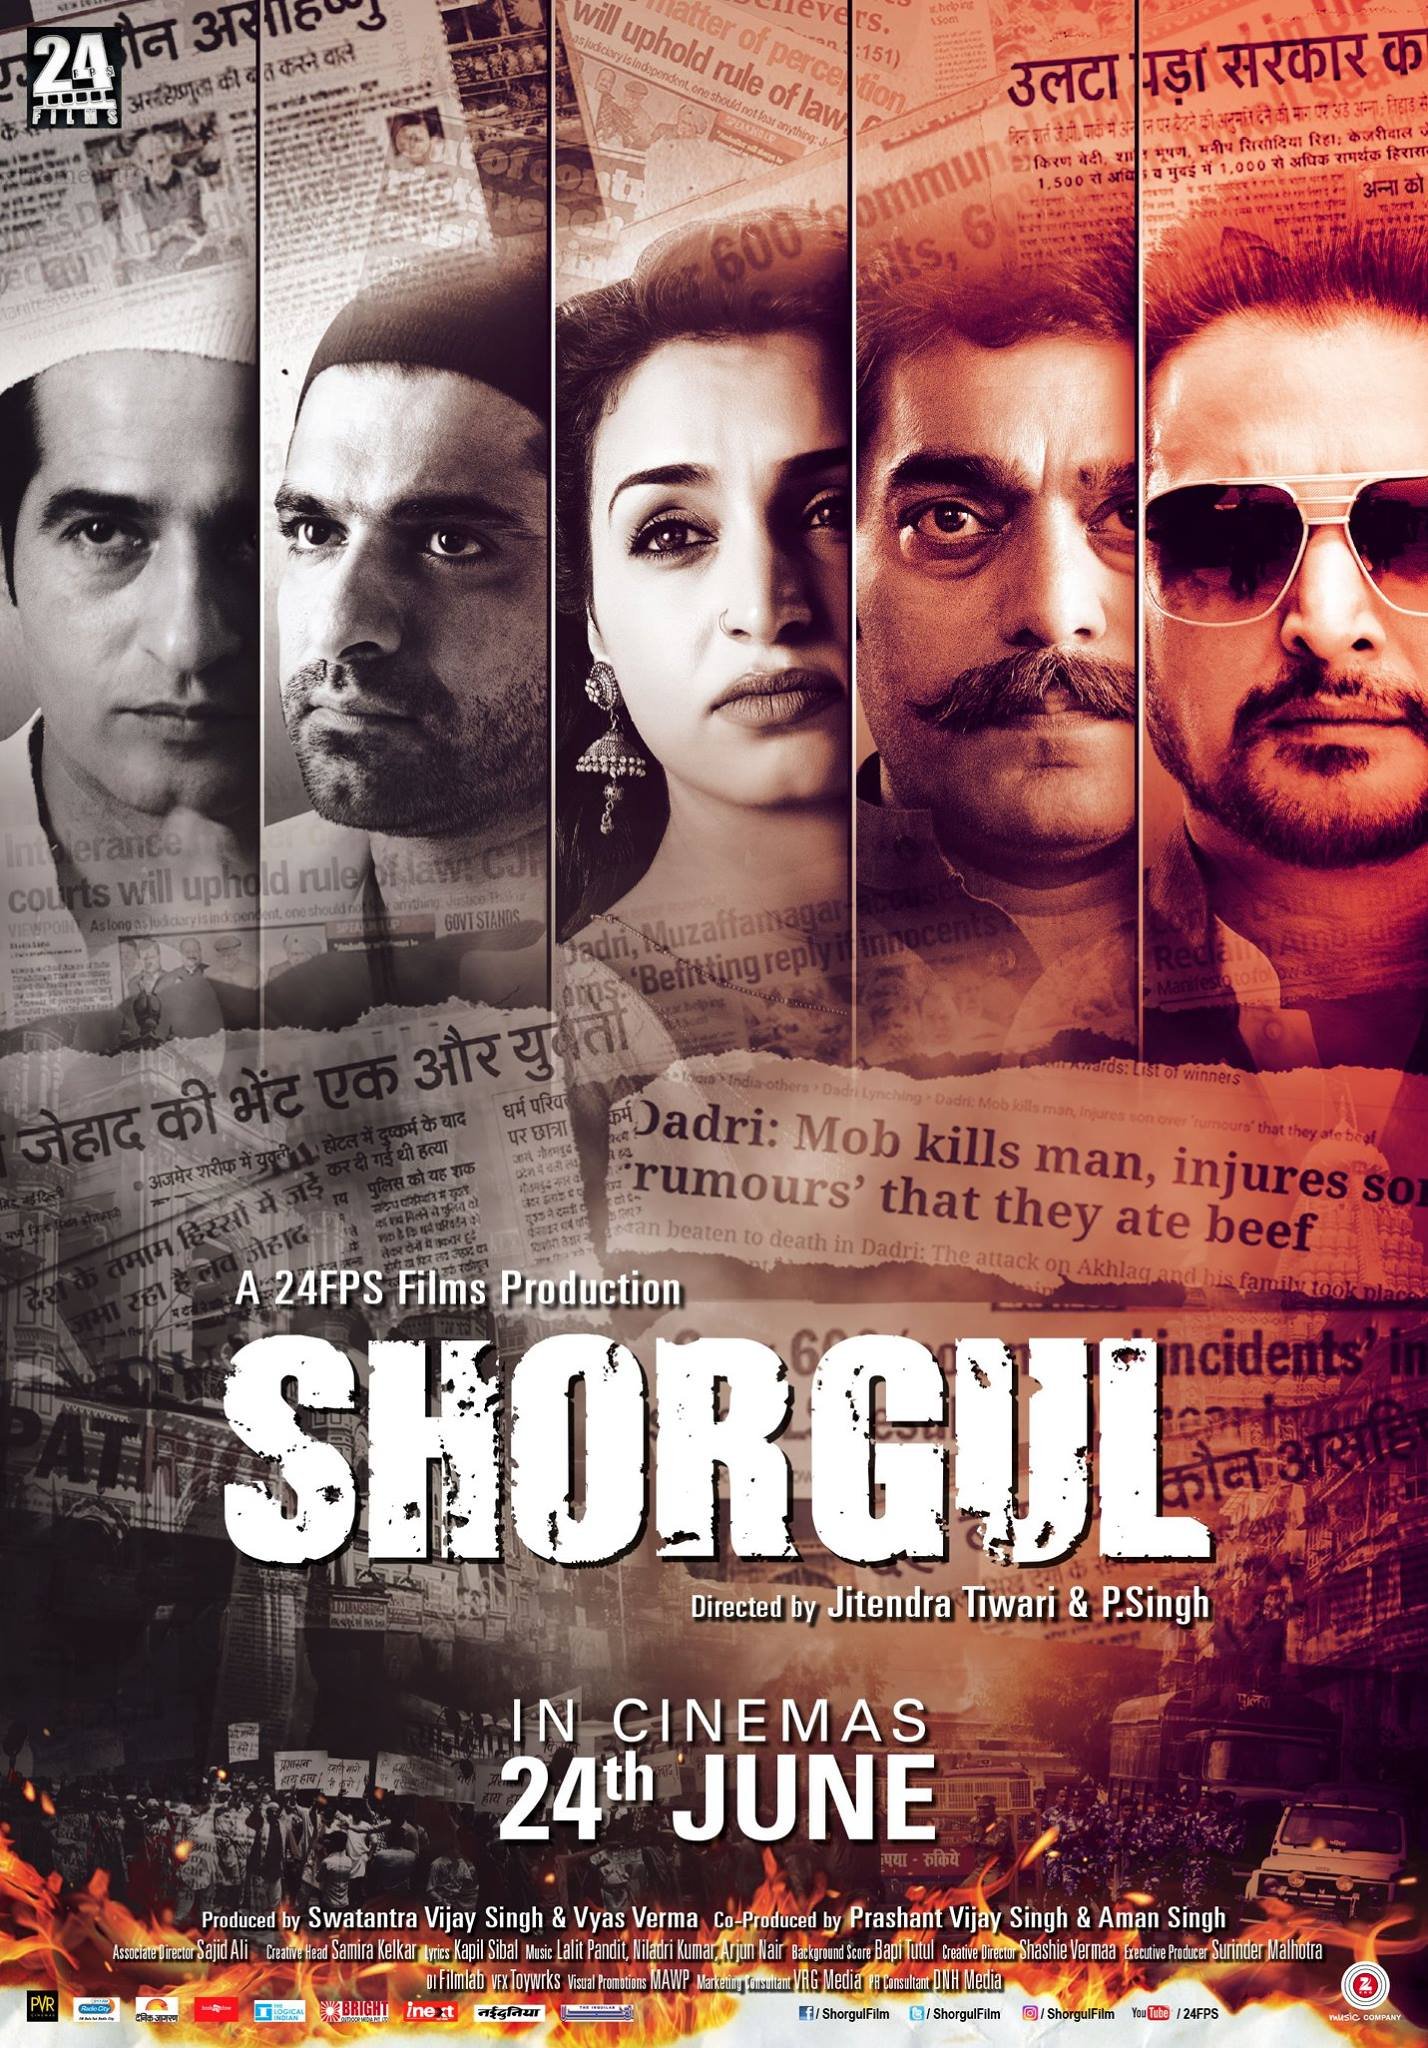 Shorgul Movie Poster